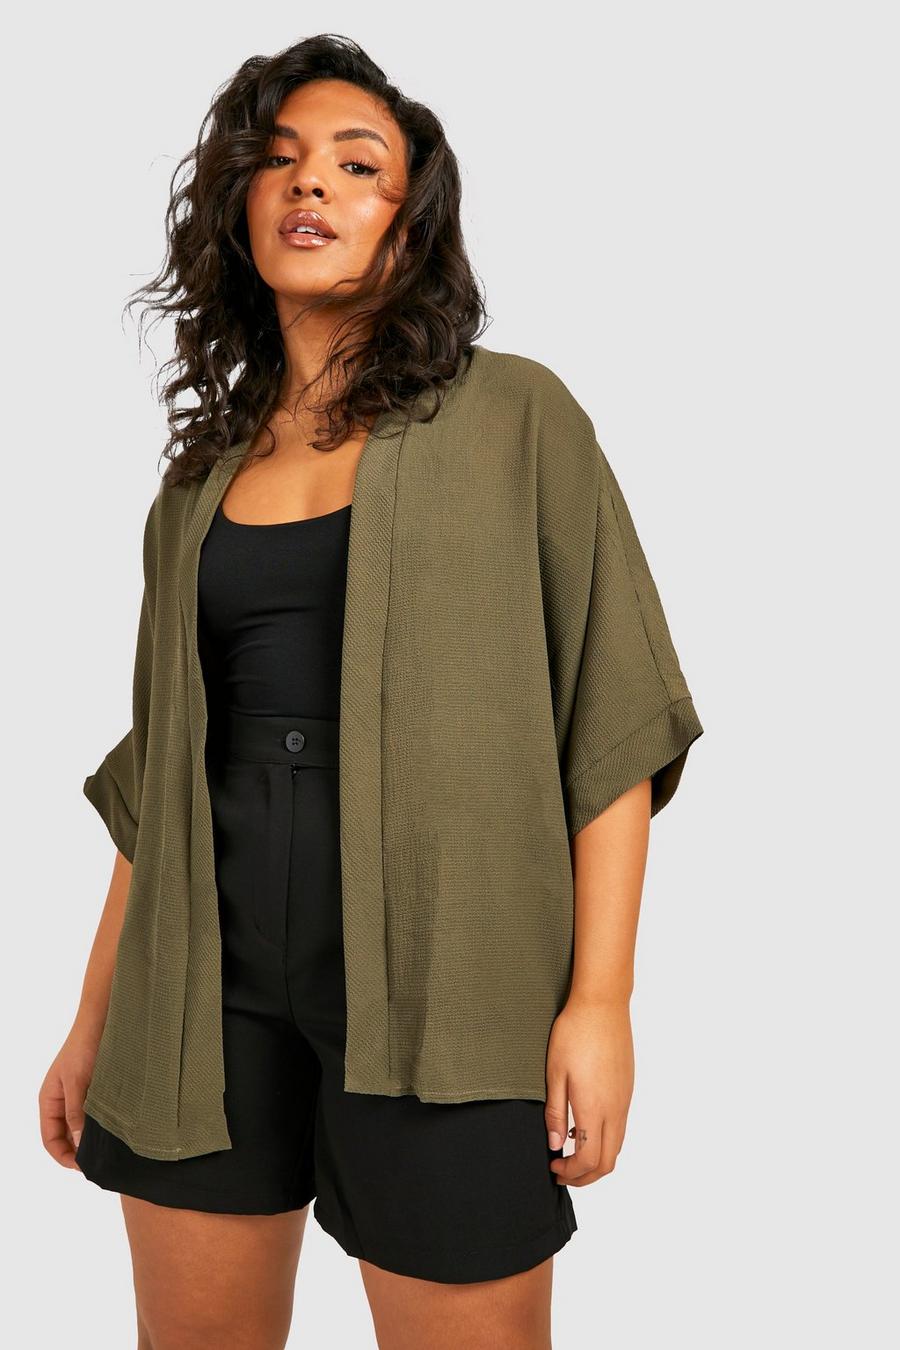 UK Women Long Sleeve Suede Cardigan Jacket Maxi Fit Coat Outwear Party Plus Size 